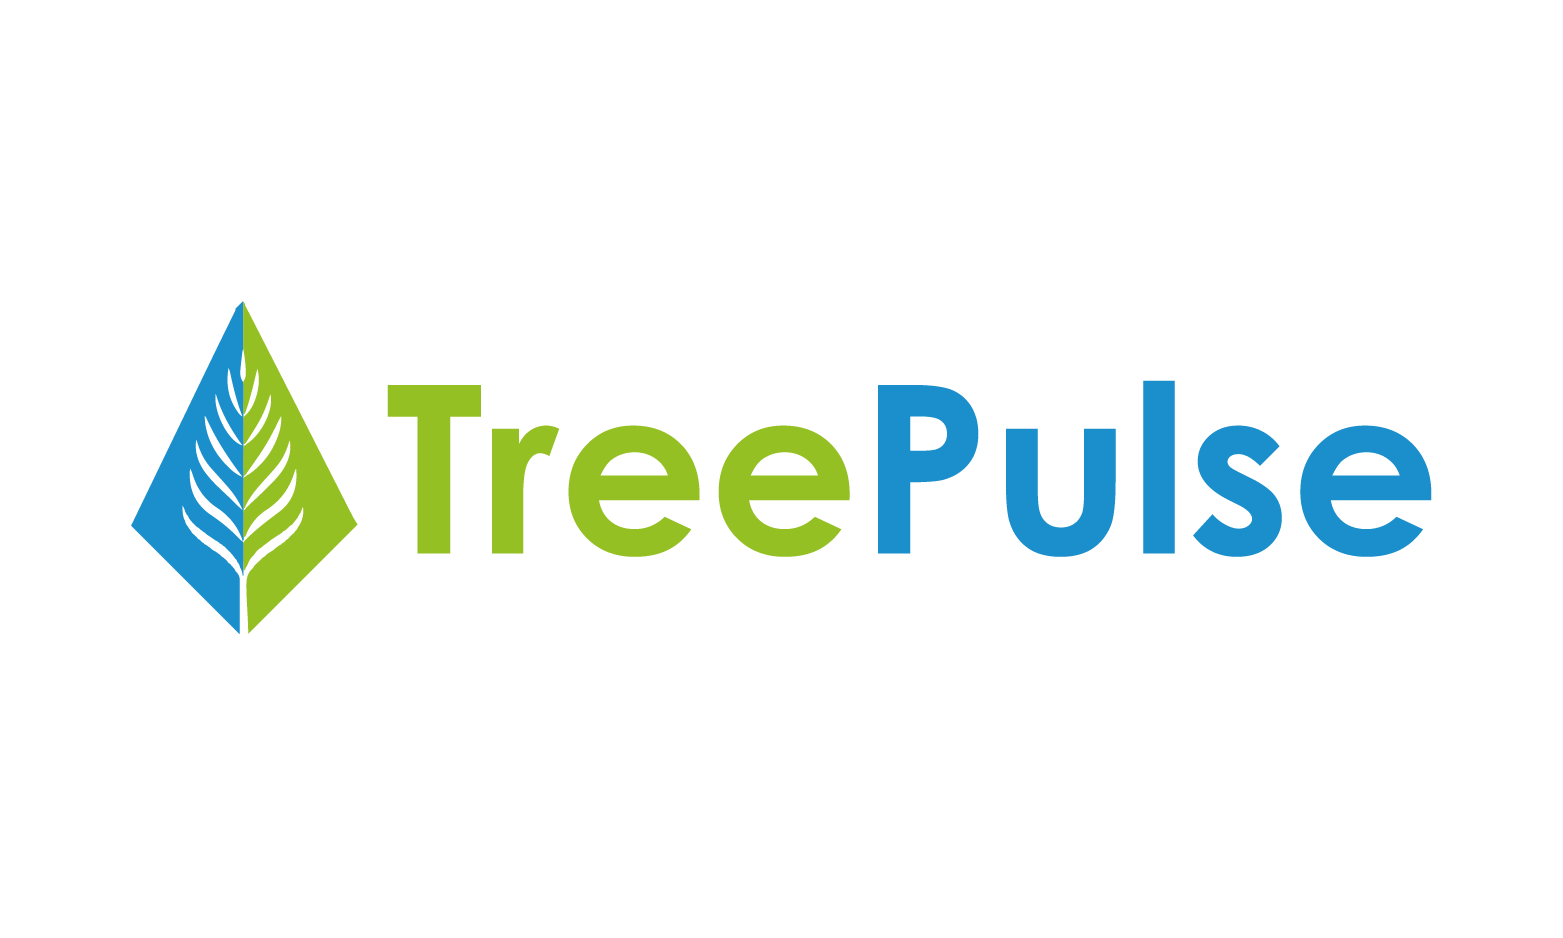 TreePulse.com - Creative brandable domain for sale